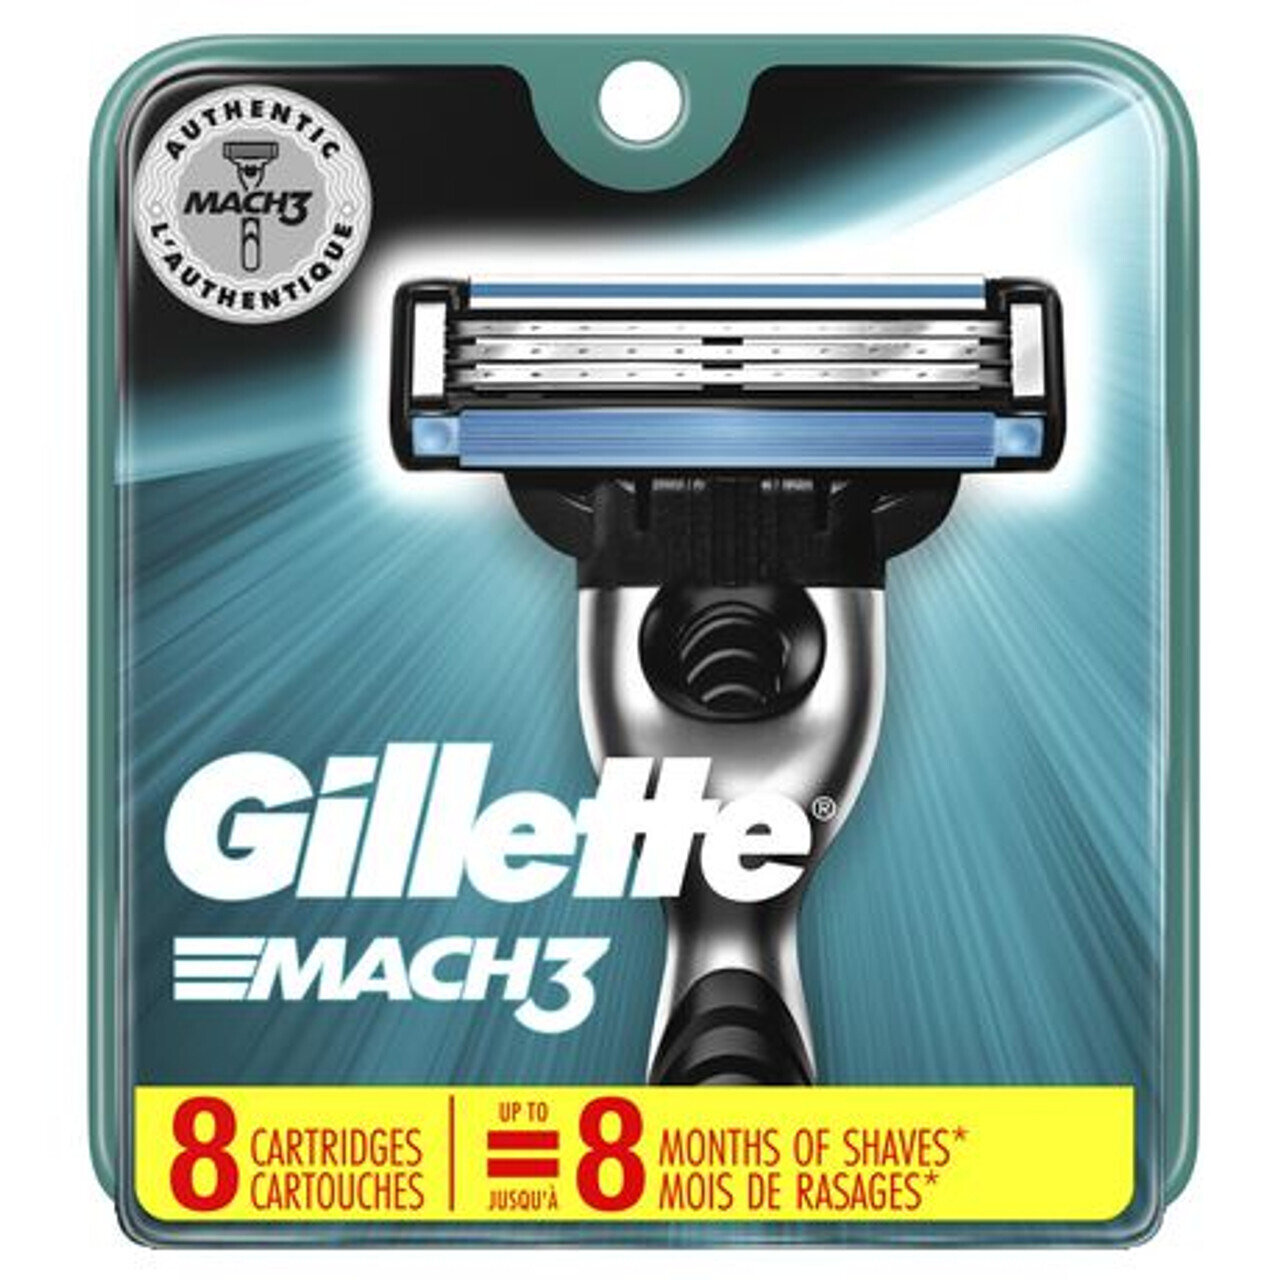 Gillette Mach 3 Replacement Blades, 8 Cartridges